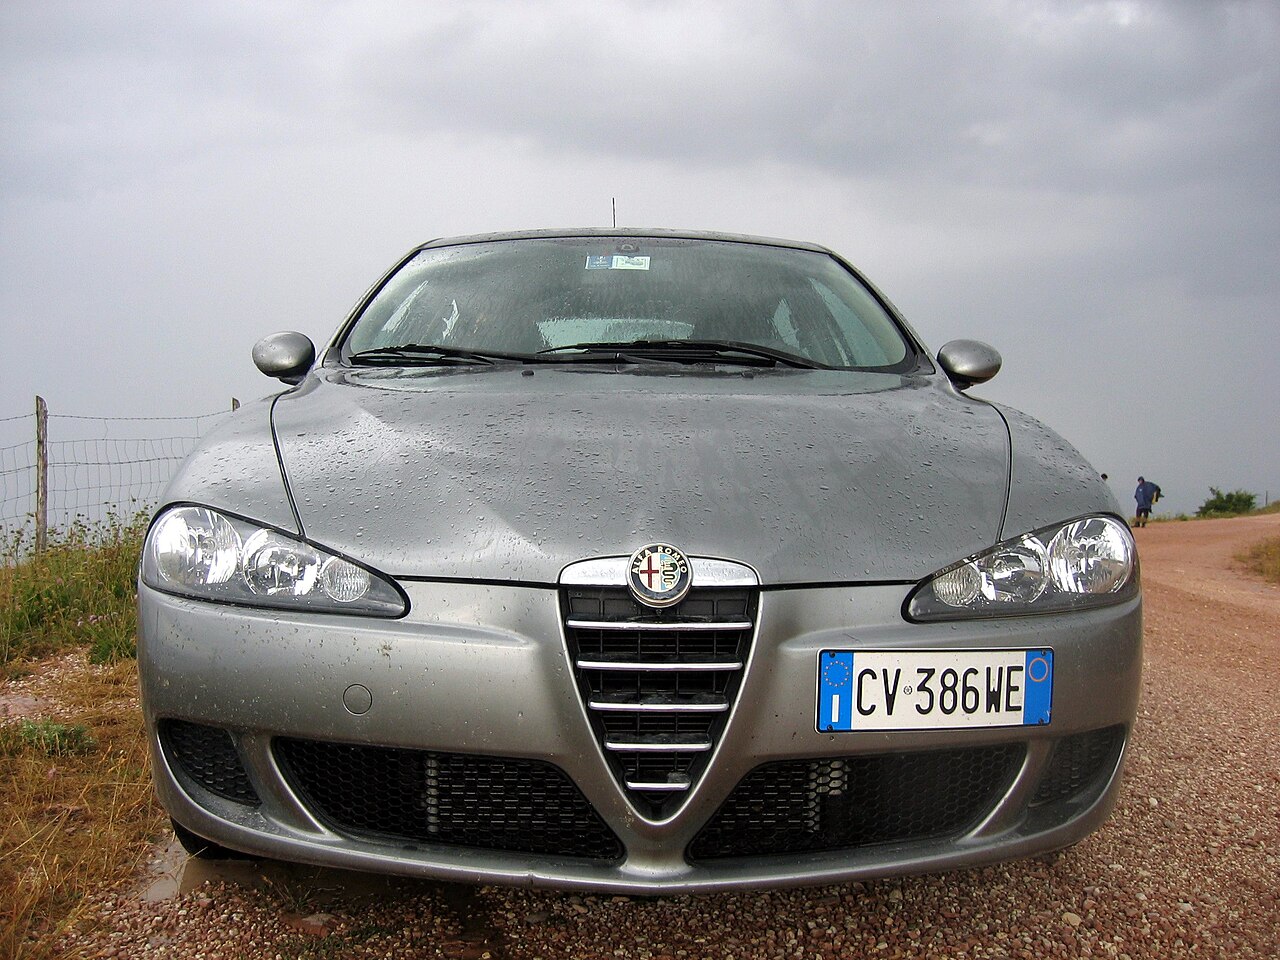 File:Alfa Romeo 147 front 20071007.jpg - Wikimedia Commons